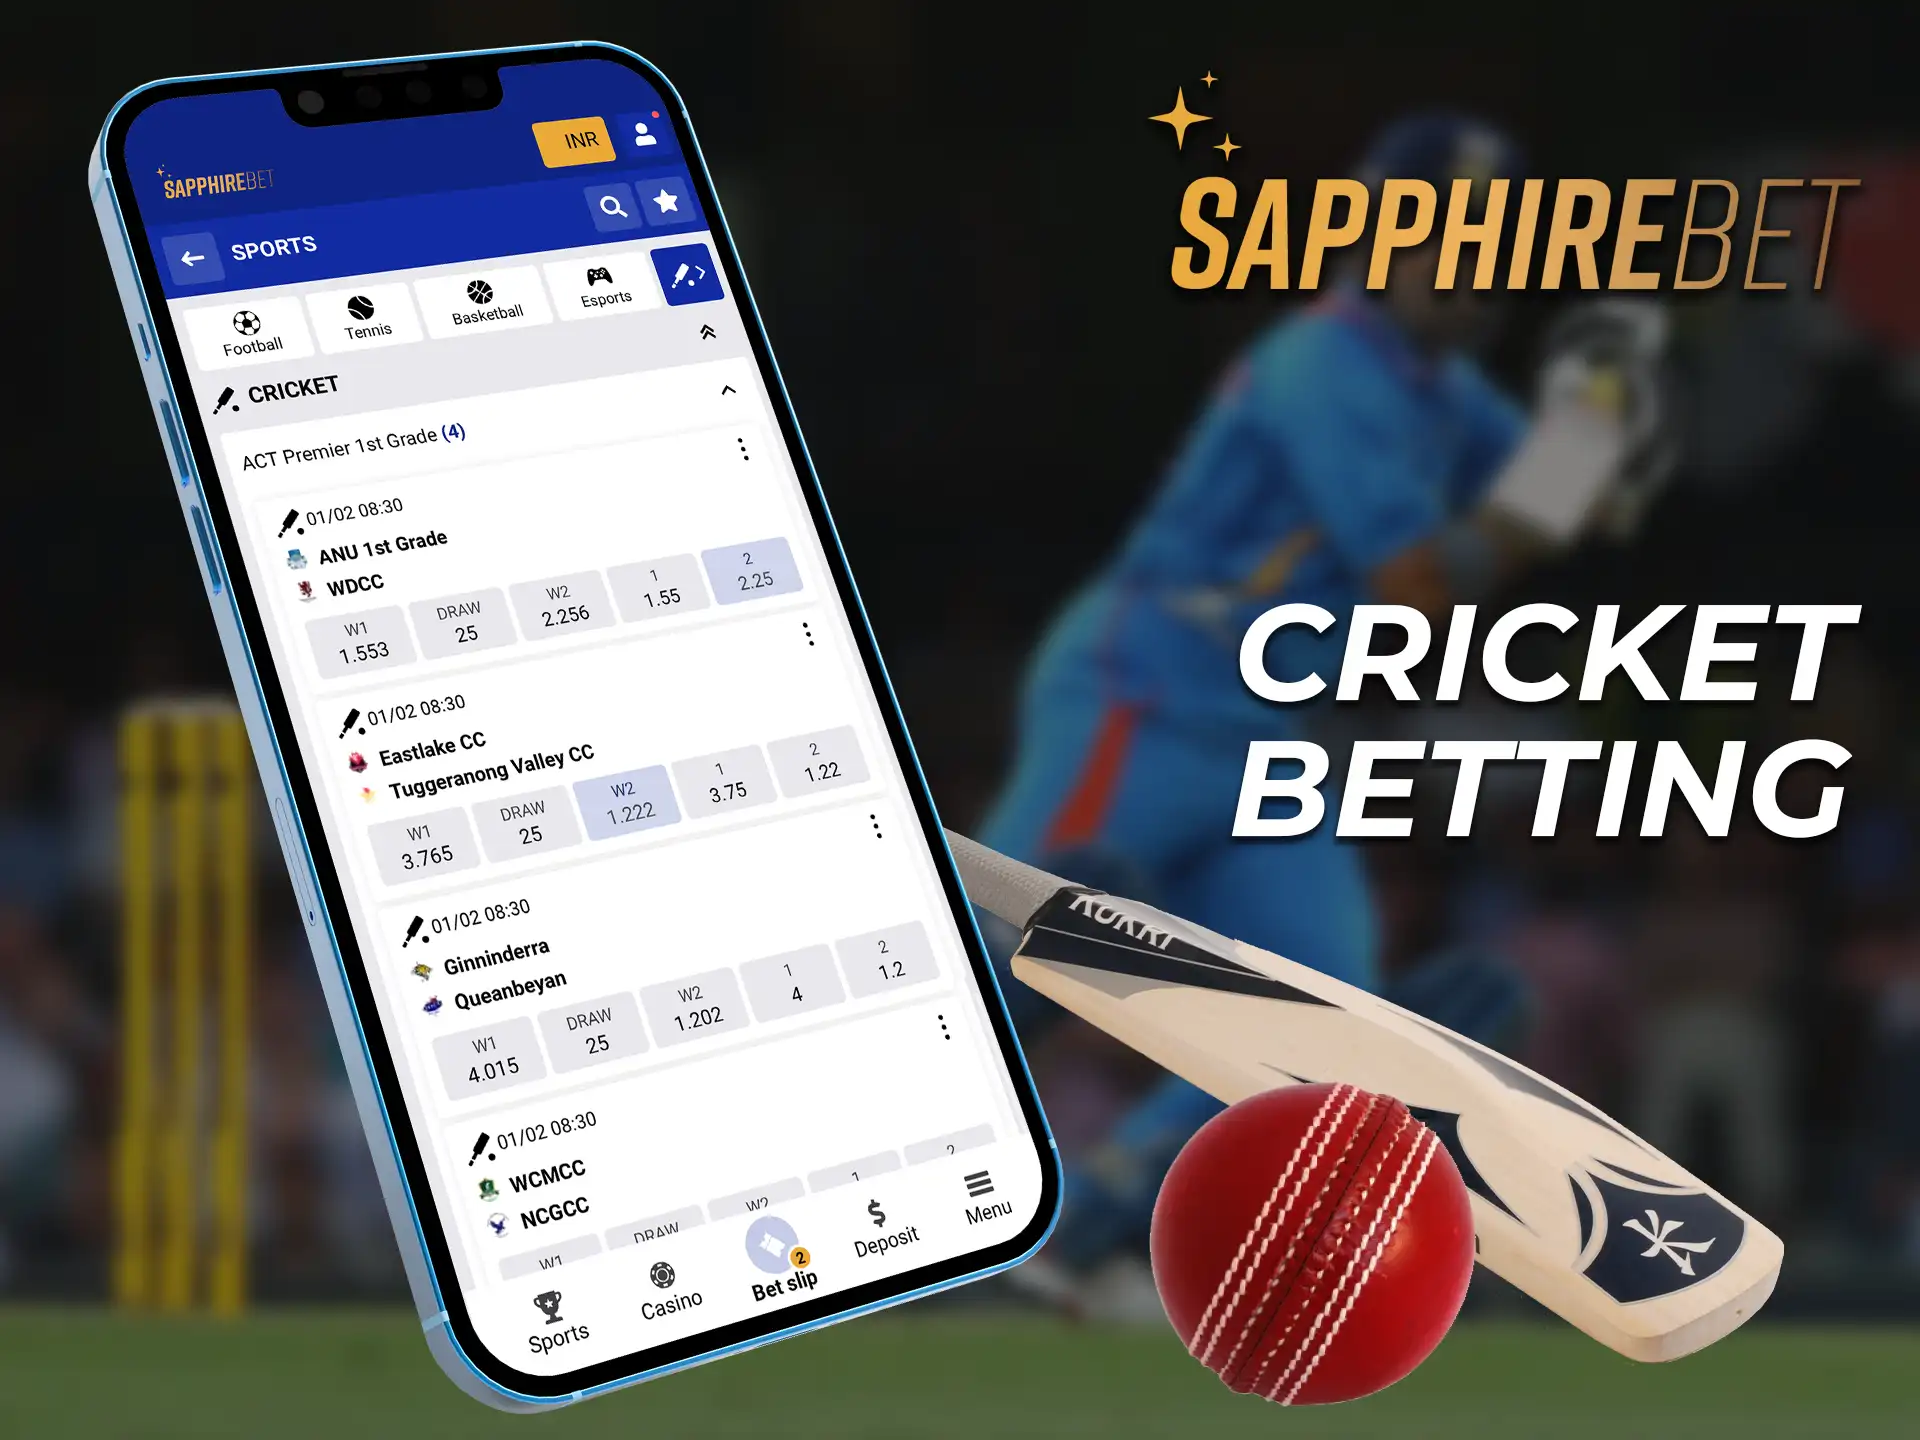 Bet on cricket on the SapphireBet mobile app.